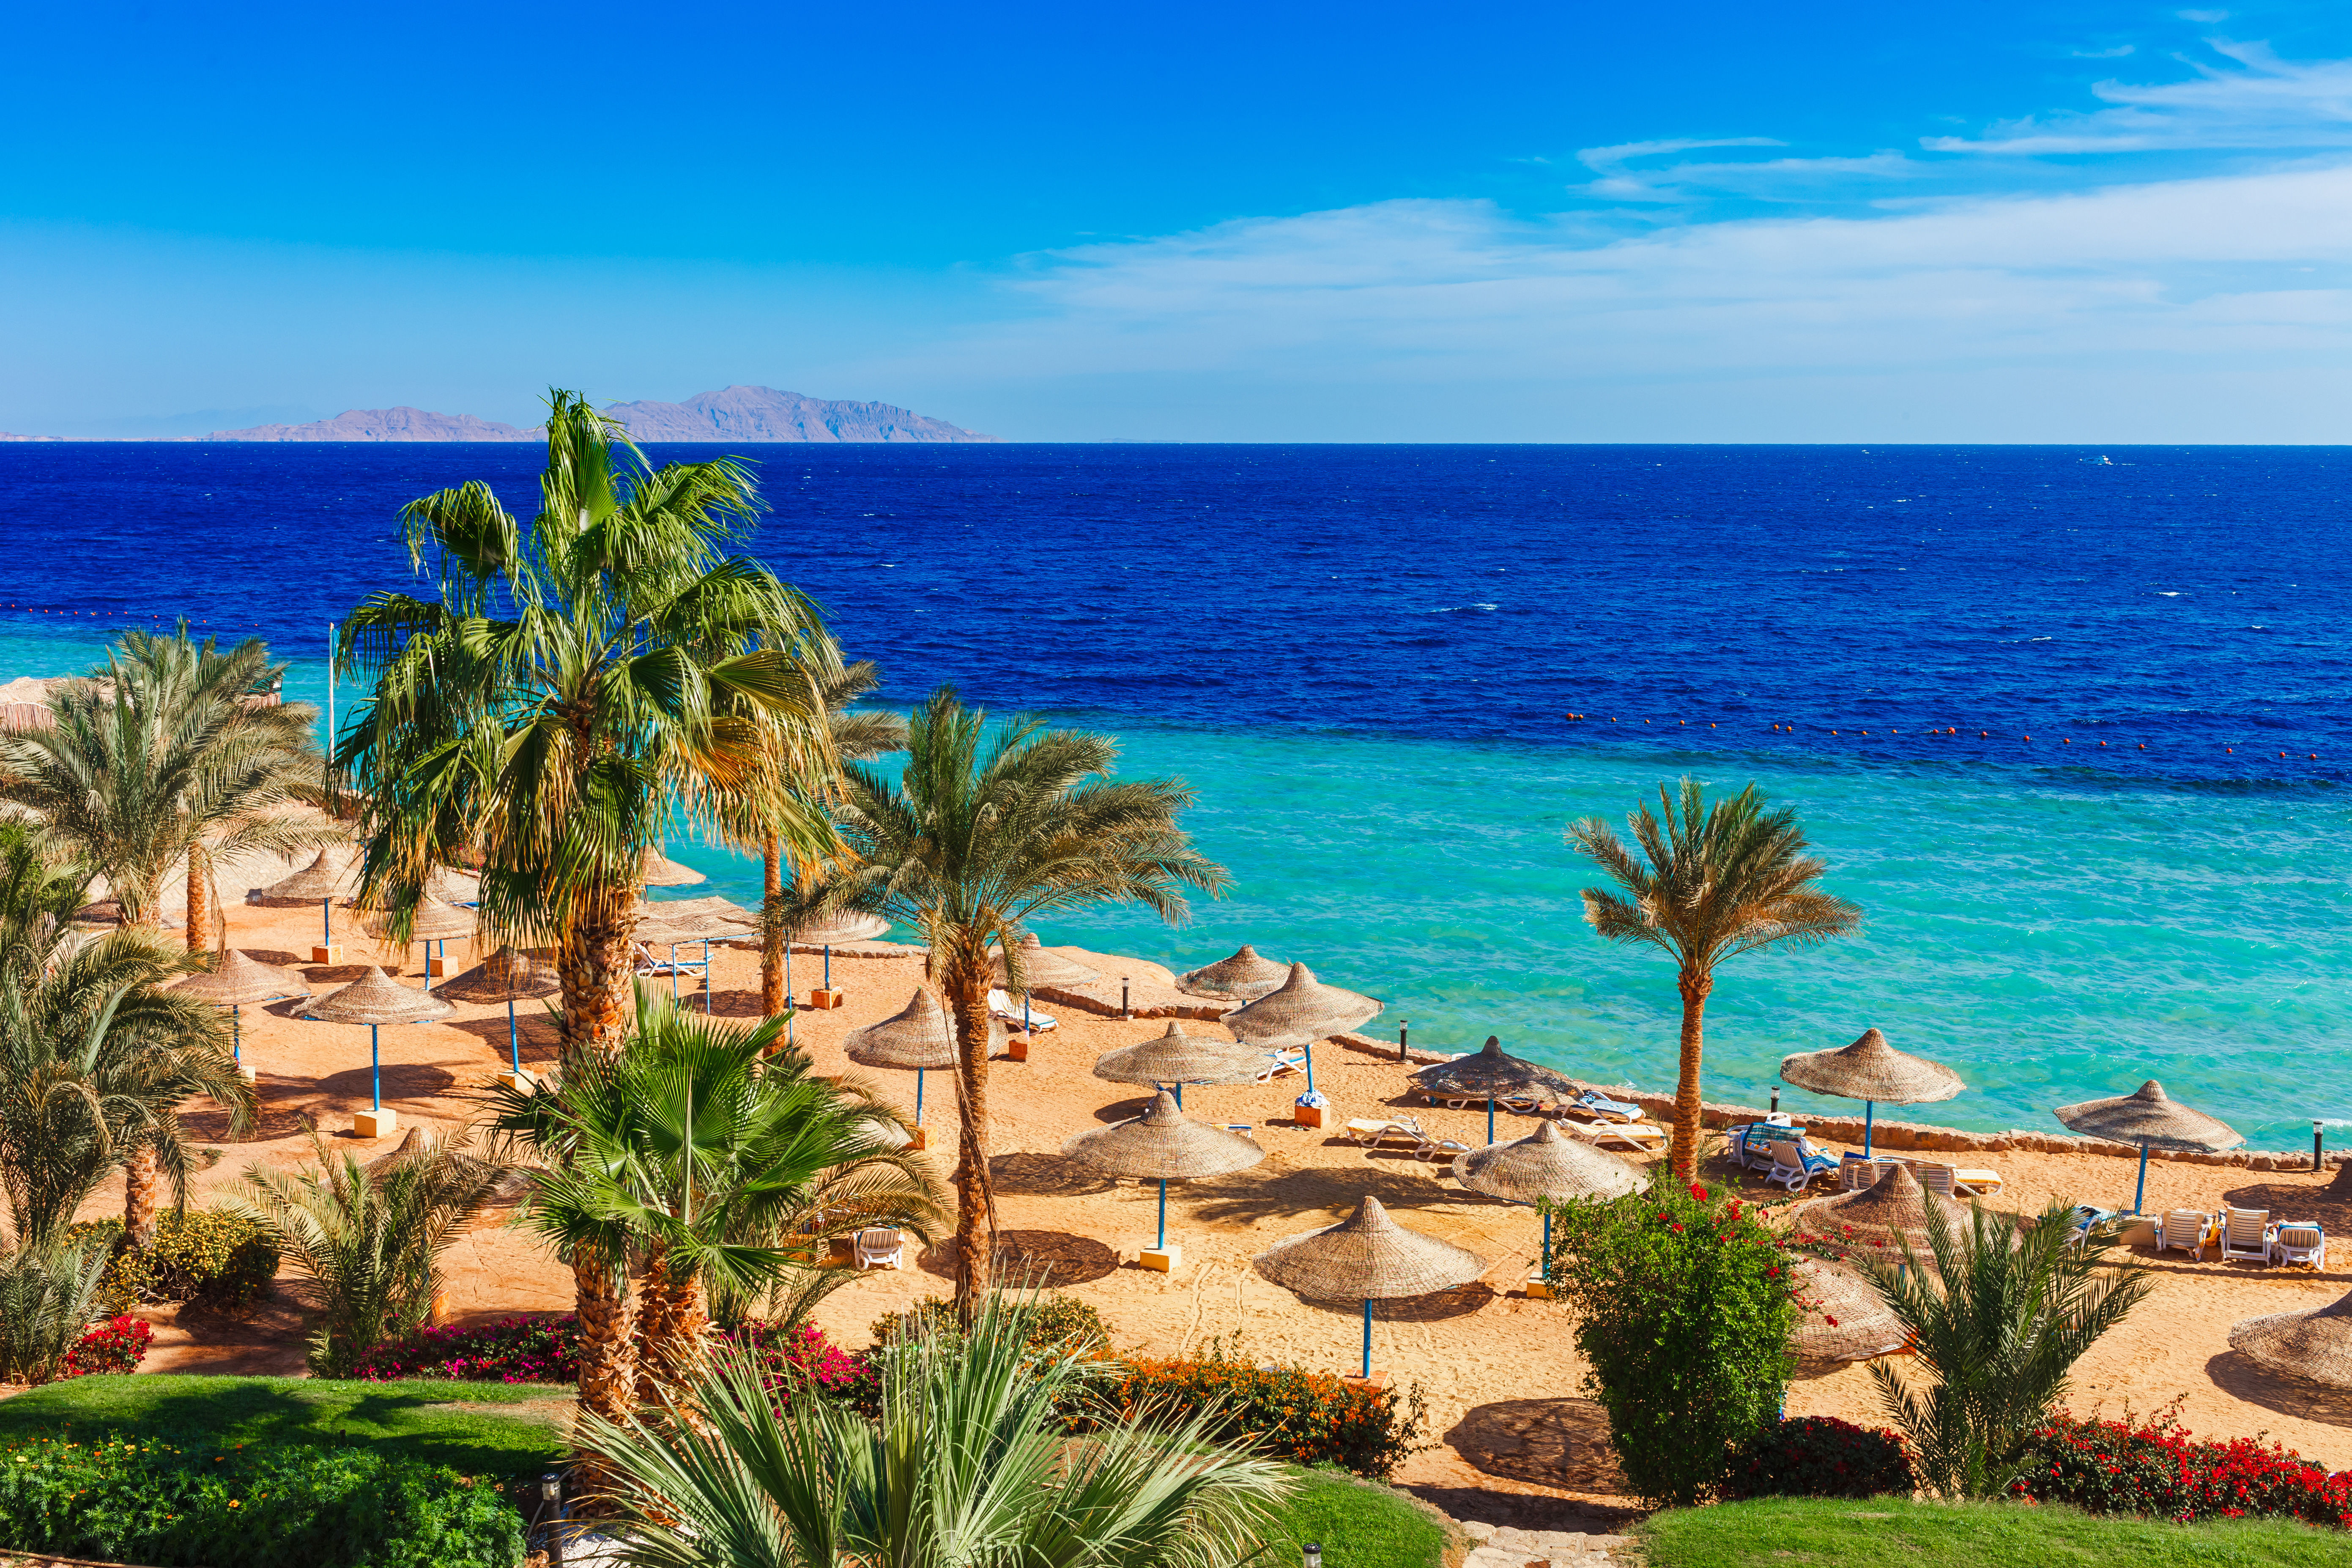 Beach umbrellas at Sharm el Sheikh resort next to tropical Red Sea and palm trees.